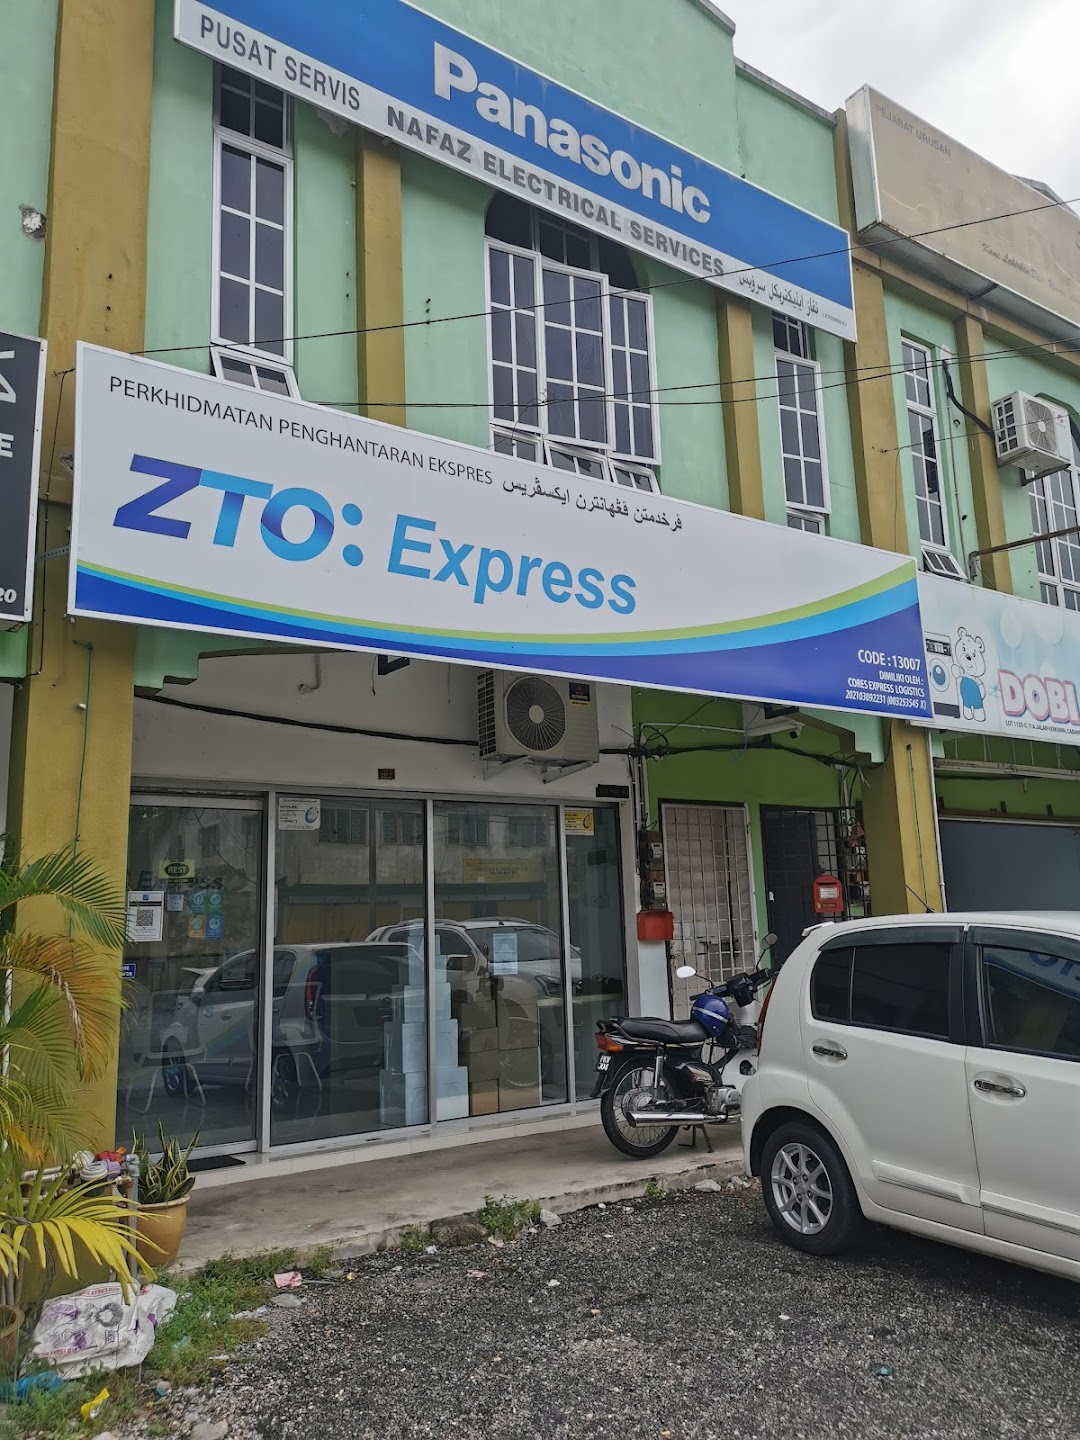 ZTO Express Pengkalan Chepa 13007